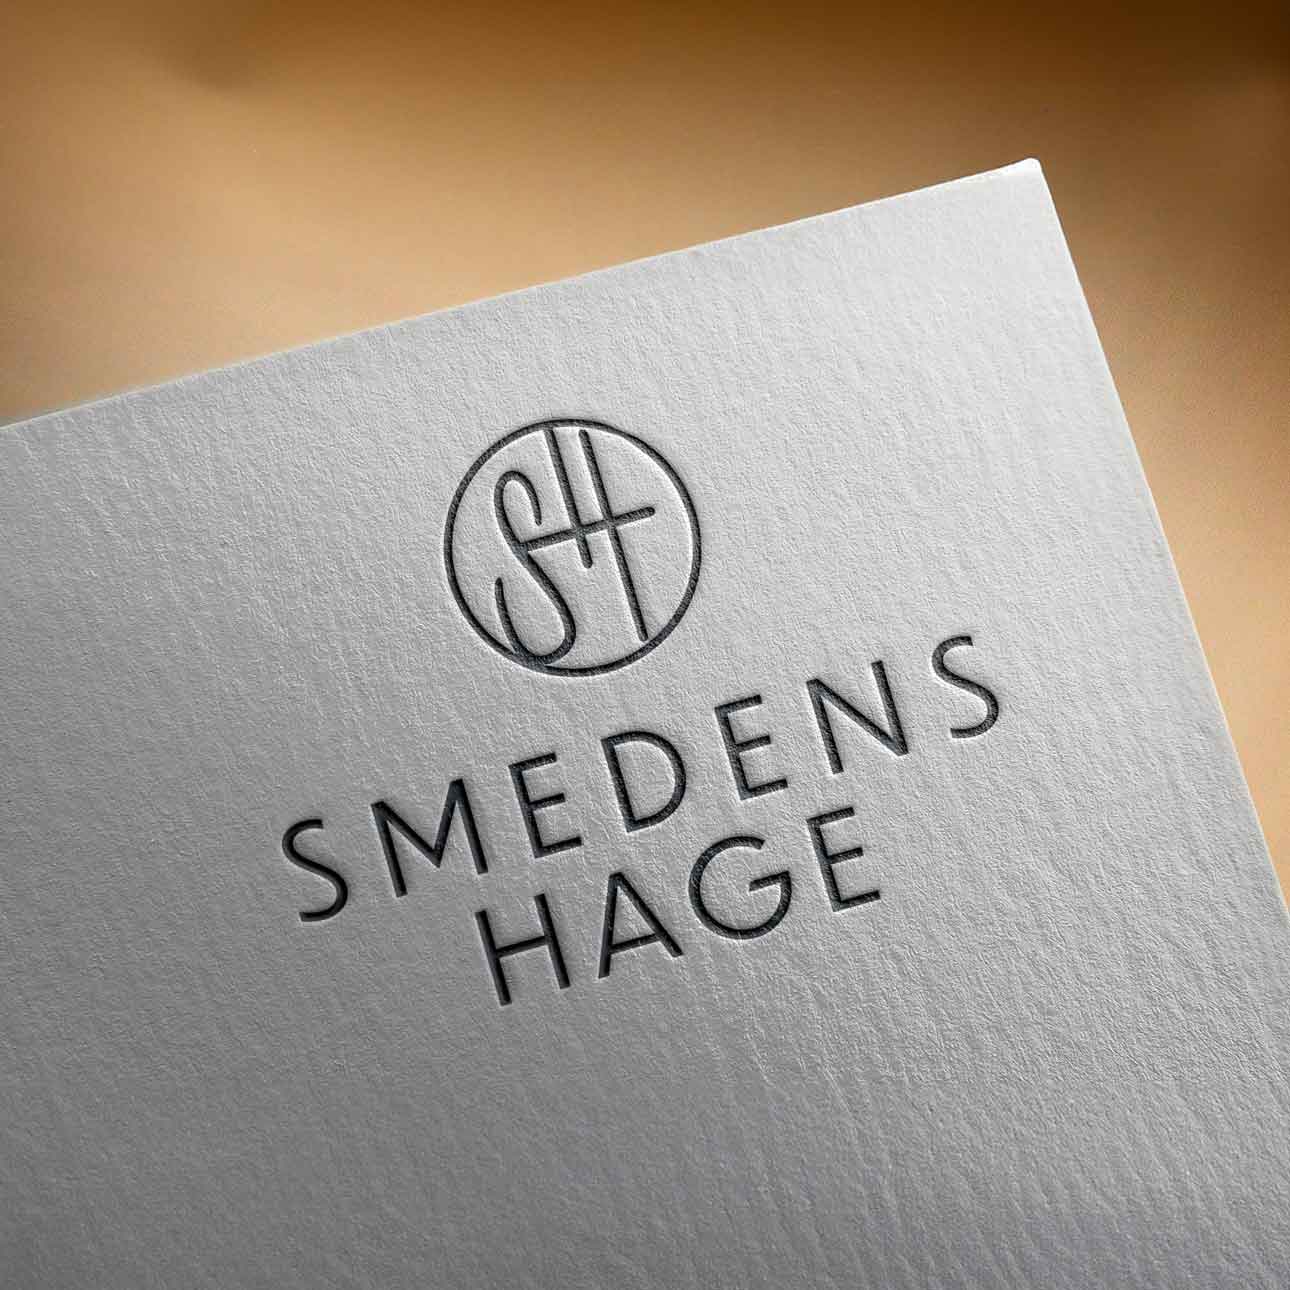 smedens-hage-Logo1 Oktav Reklamebyrå